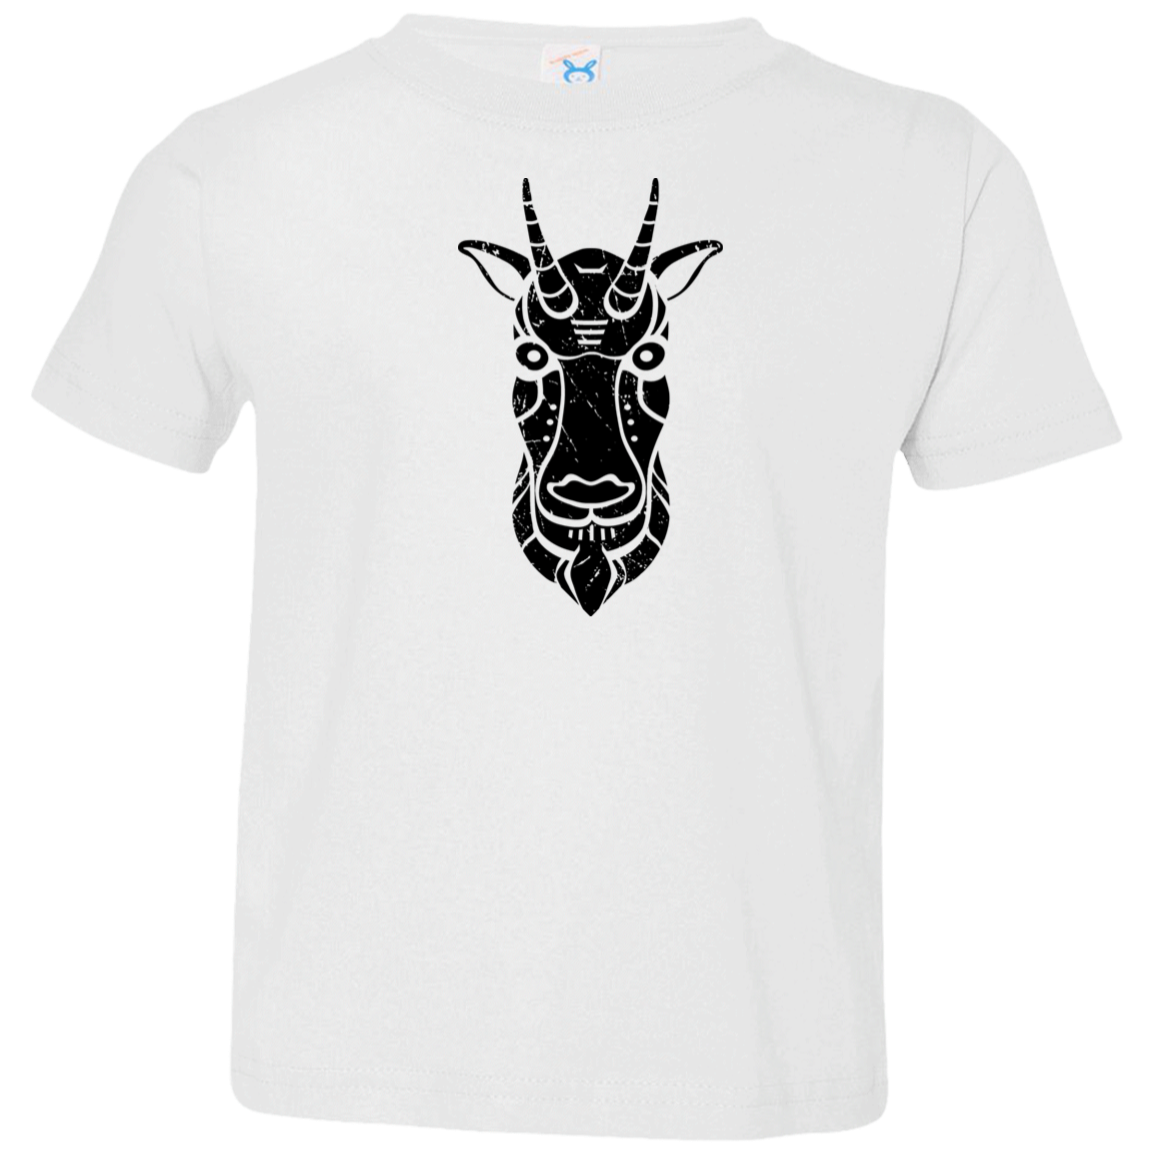 Black Distressed Emblem T-Shirt for Toddlers (Mountain Goat/Rainier)